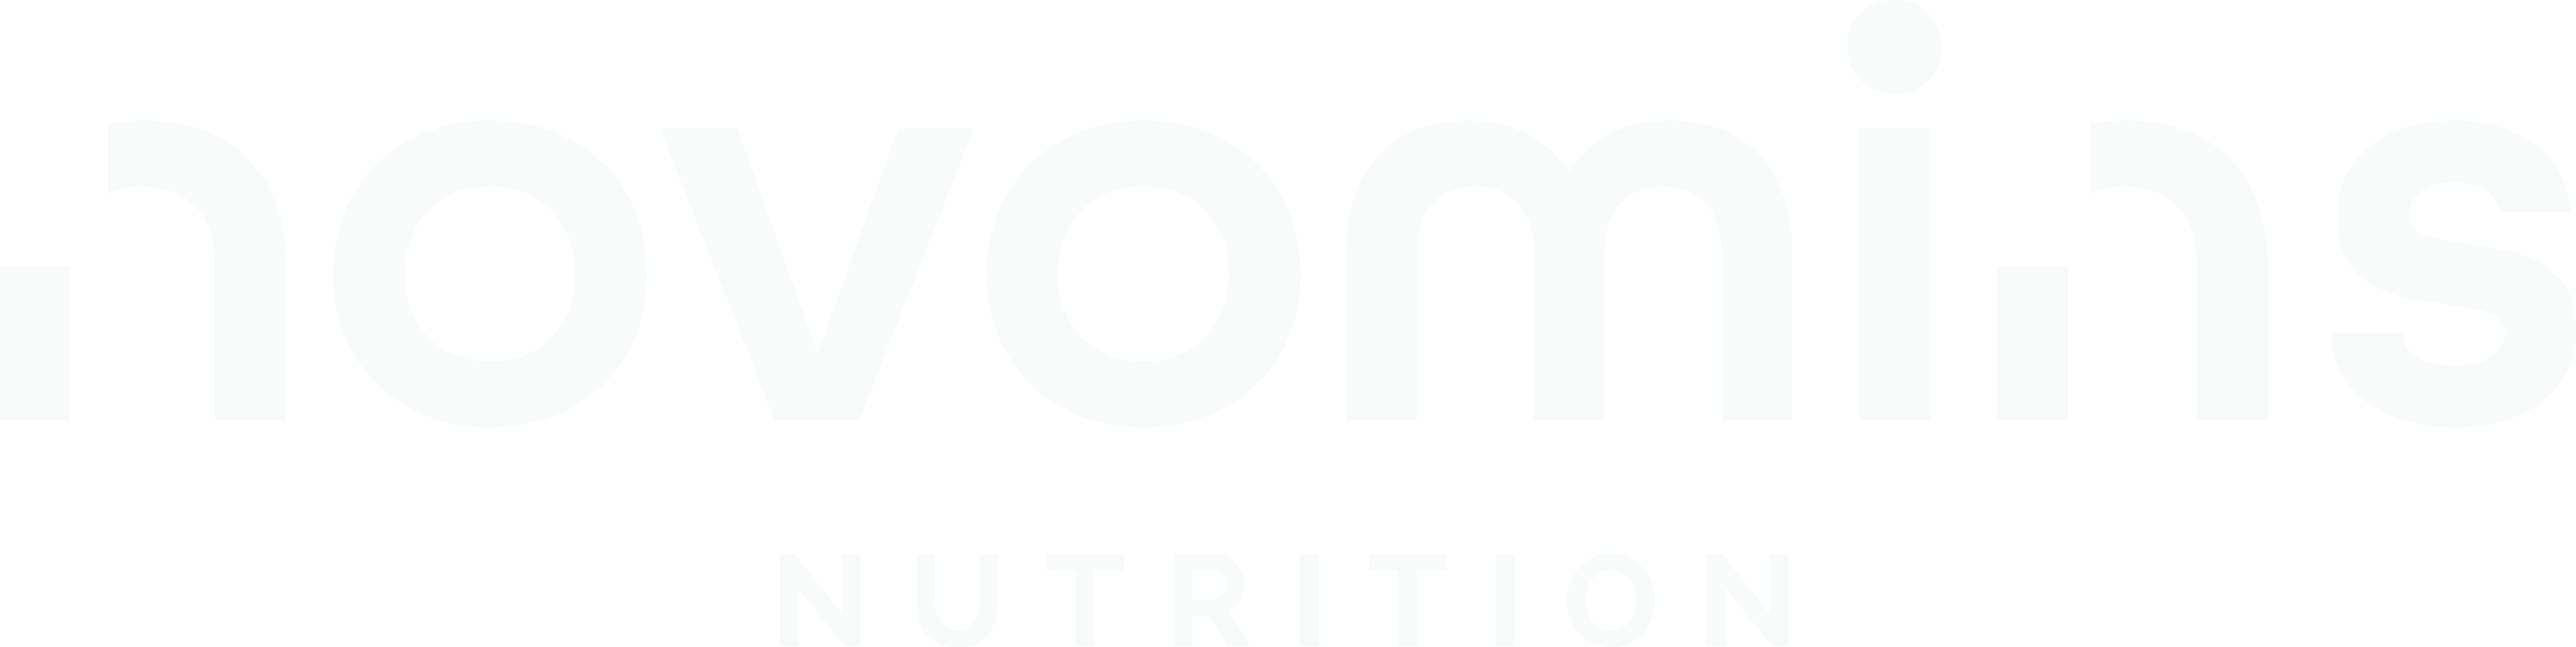 Novomins Nutrition